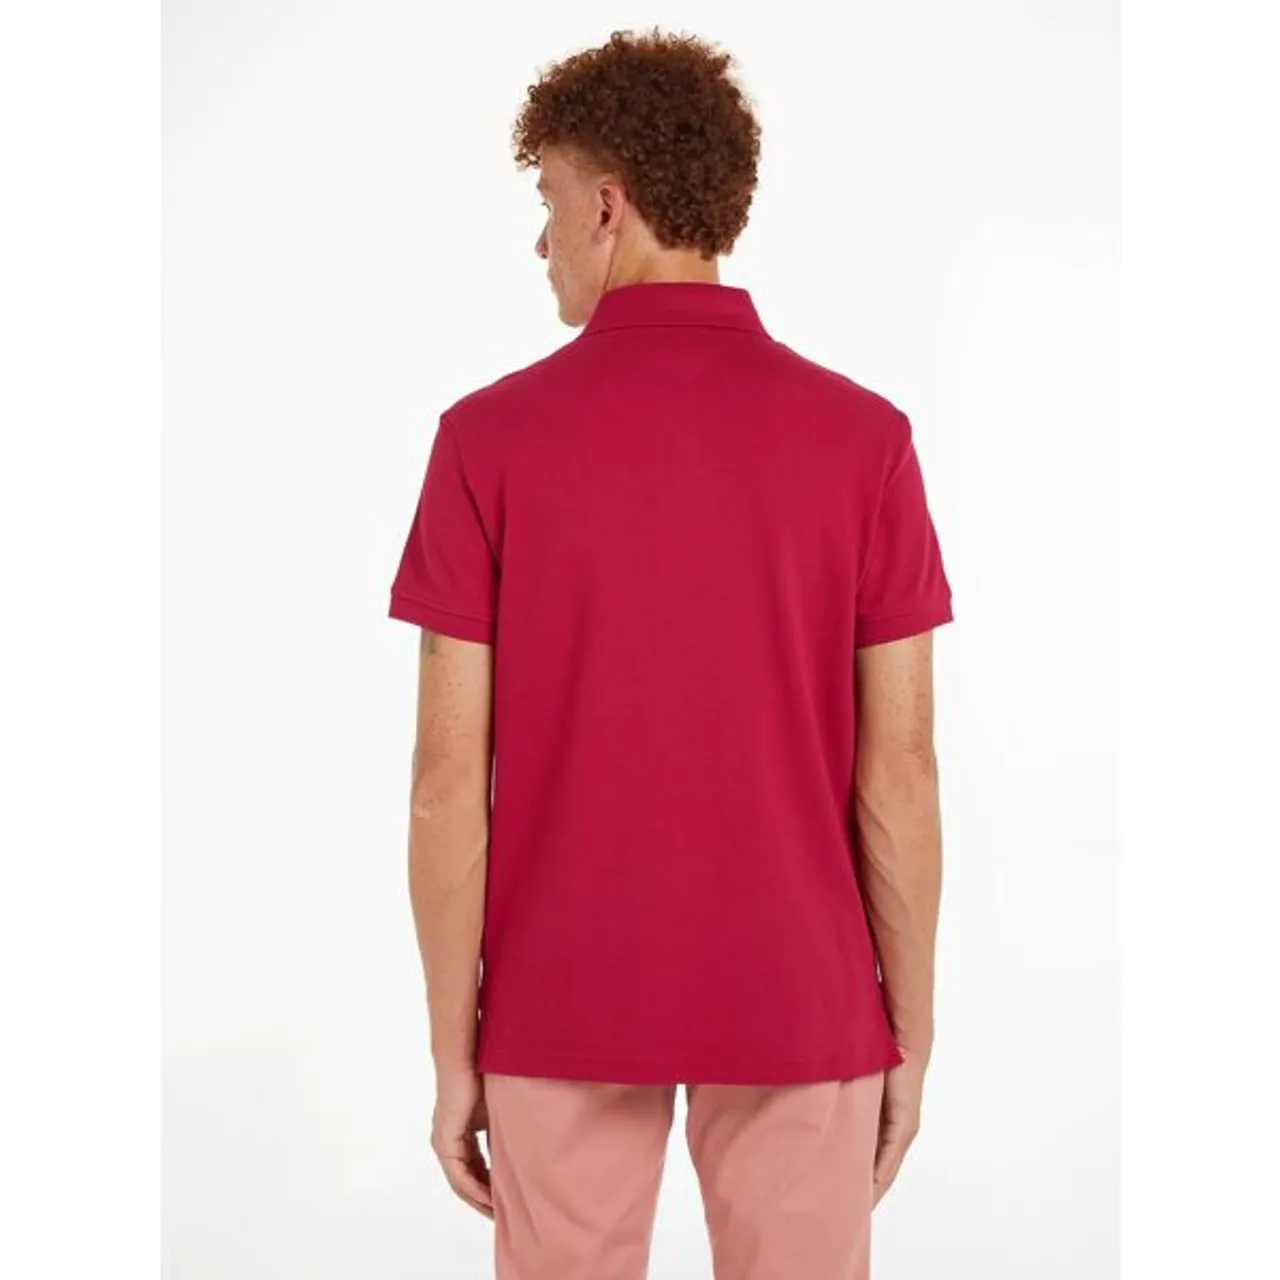 Poloshirt TOMMY HILFIGER "1985 SLIM POLO" Gr. XL, rot (royal berry) Herren Shirts Kurzarm Markenstickerei, aus Baumwoll-Piqué